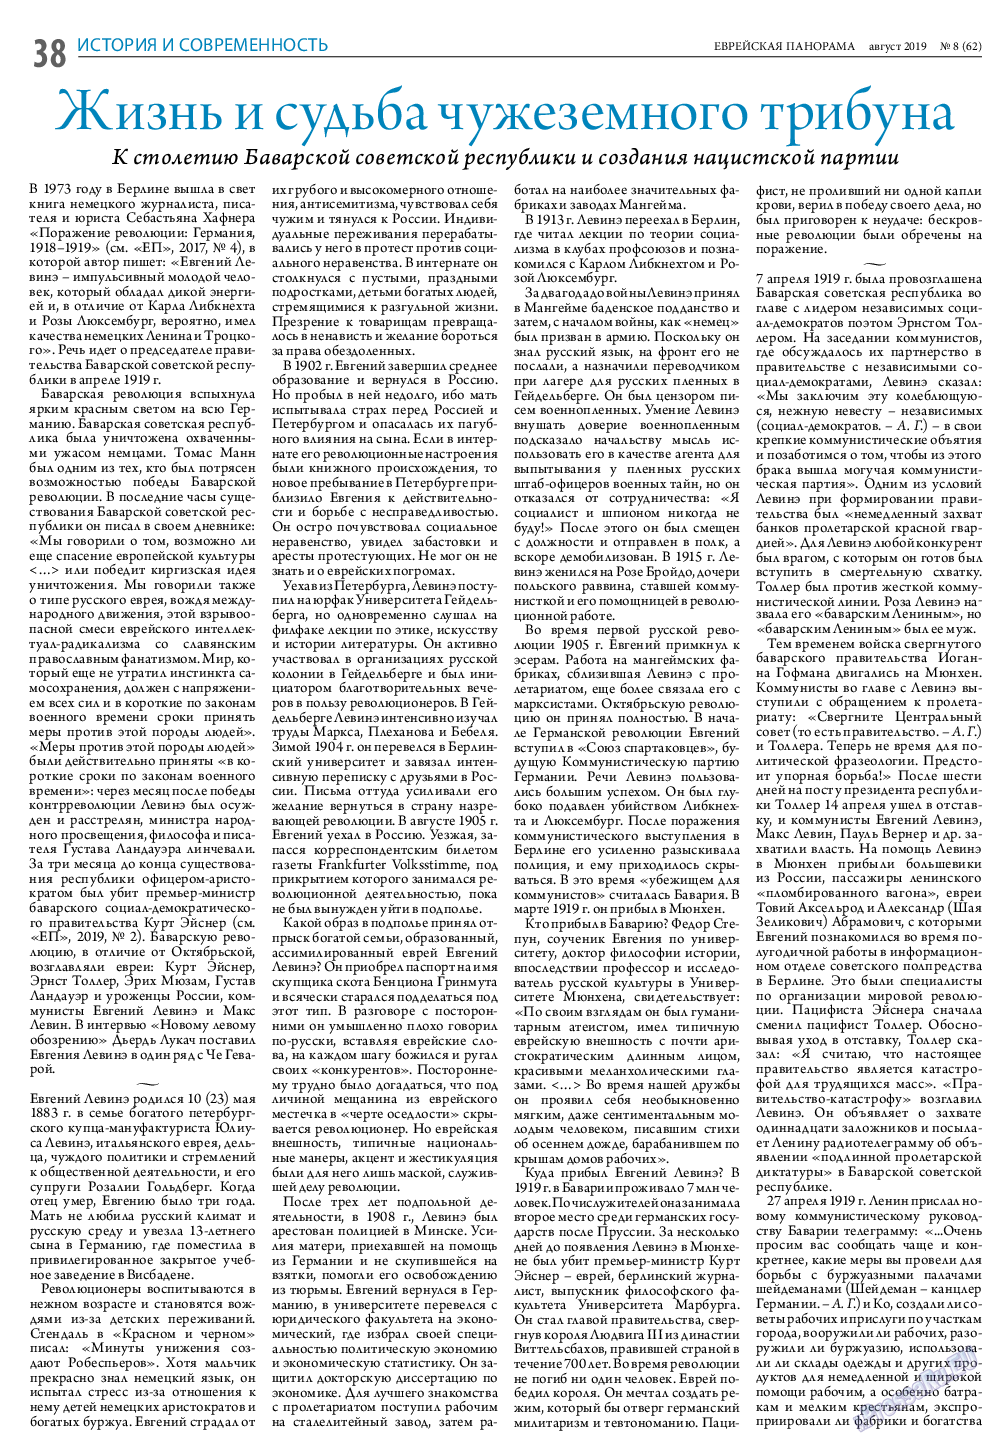 Еврейская панорама, газета. 2019 №8 стр.38